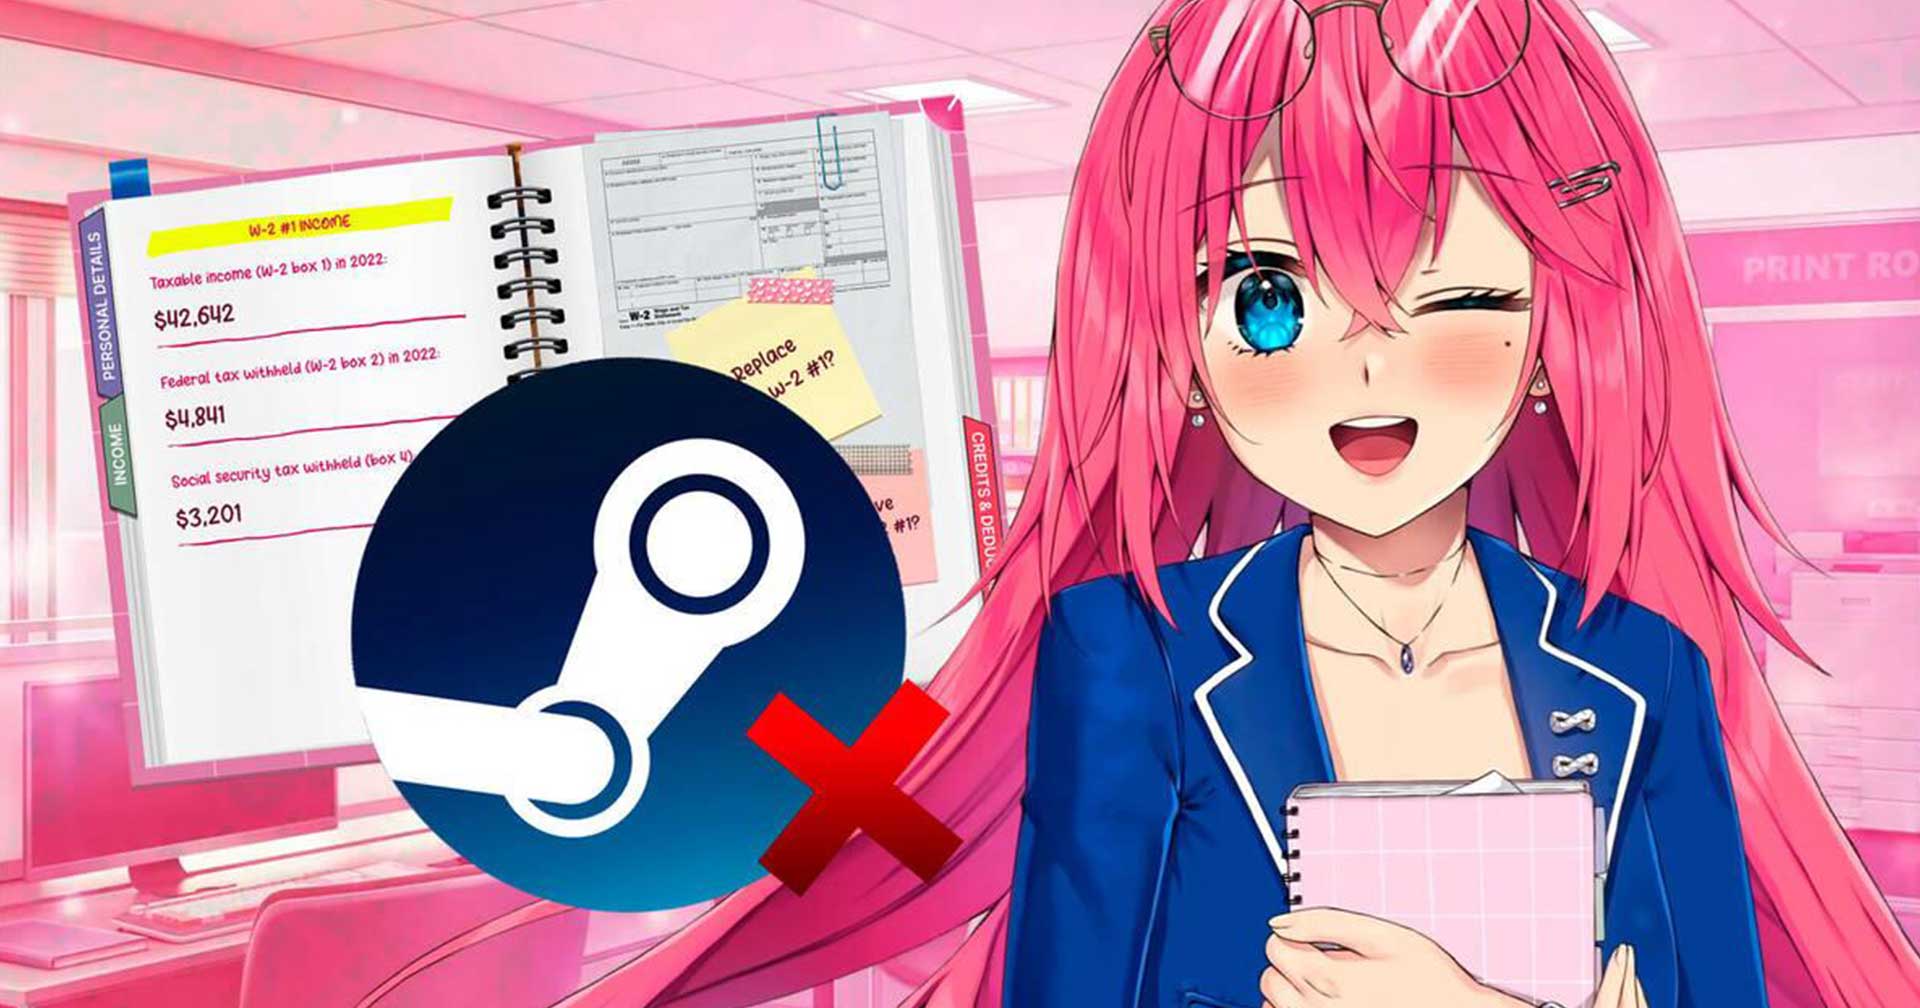 Steam ถอดเกมจีบสาวที่ช่วยจัดการภาษีออกจากหน้าร้าน เพราะขอข้อมูลส่วนตัวผู้เล่น